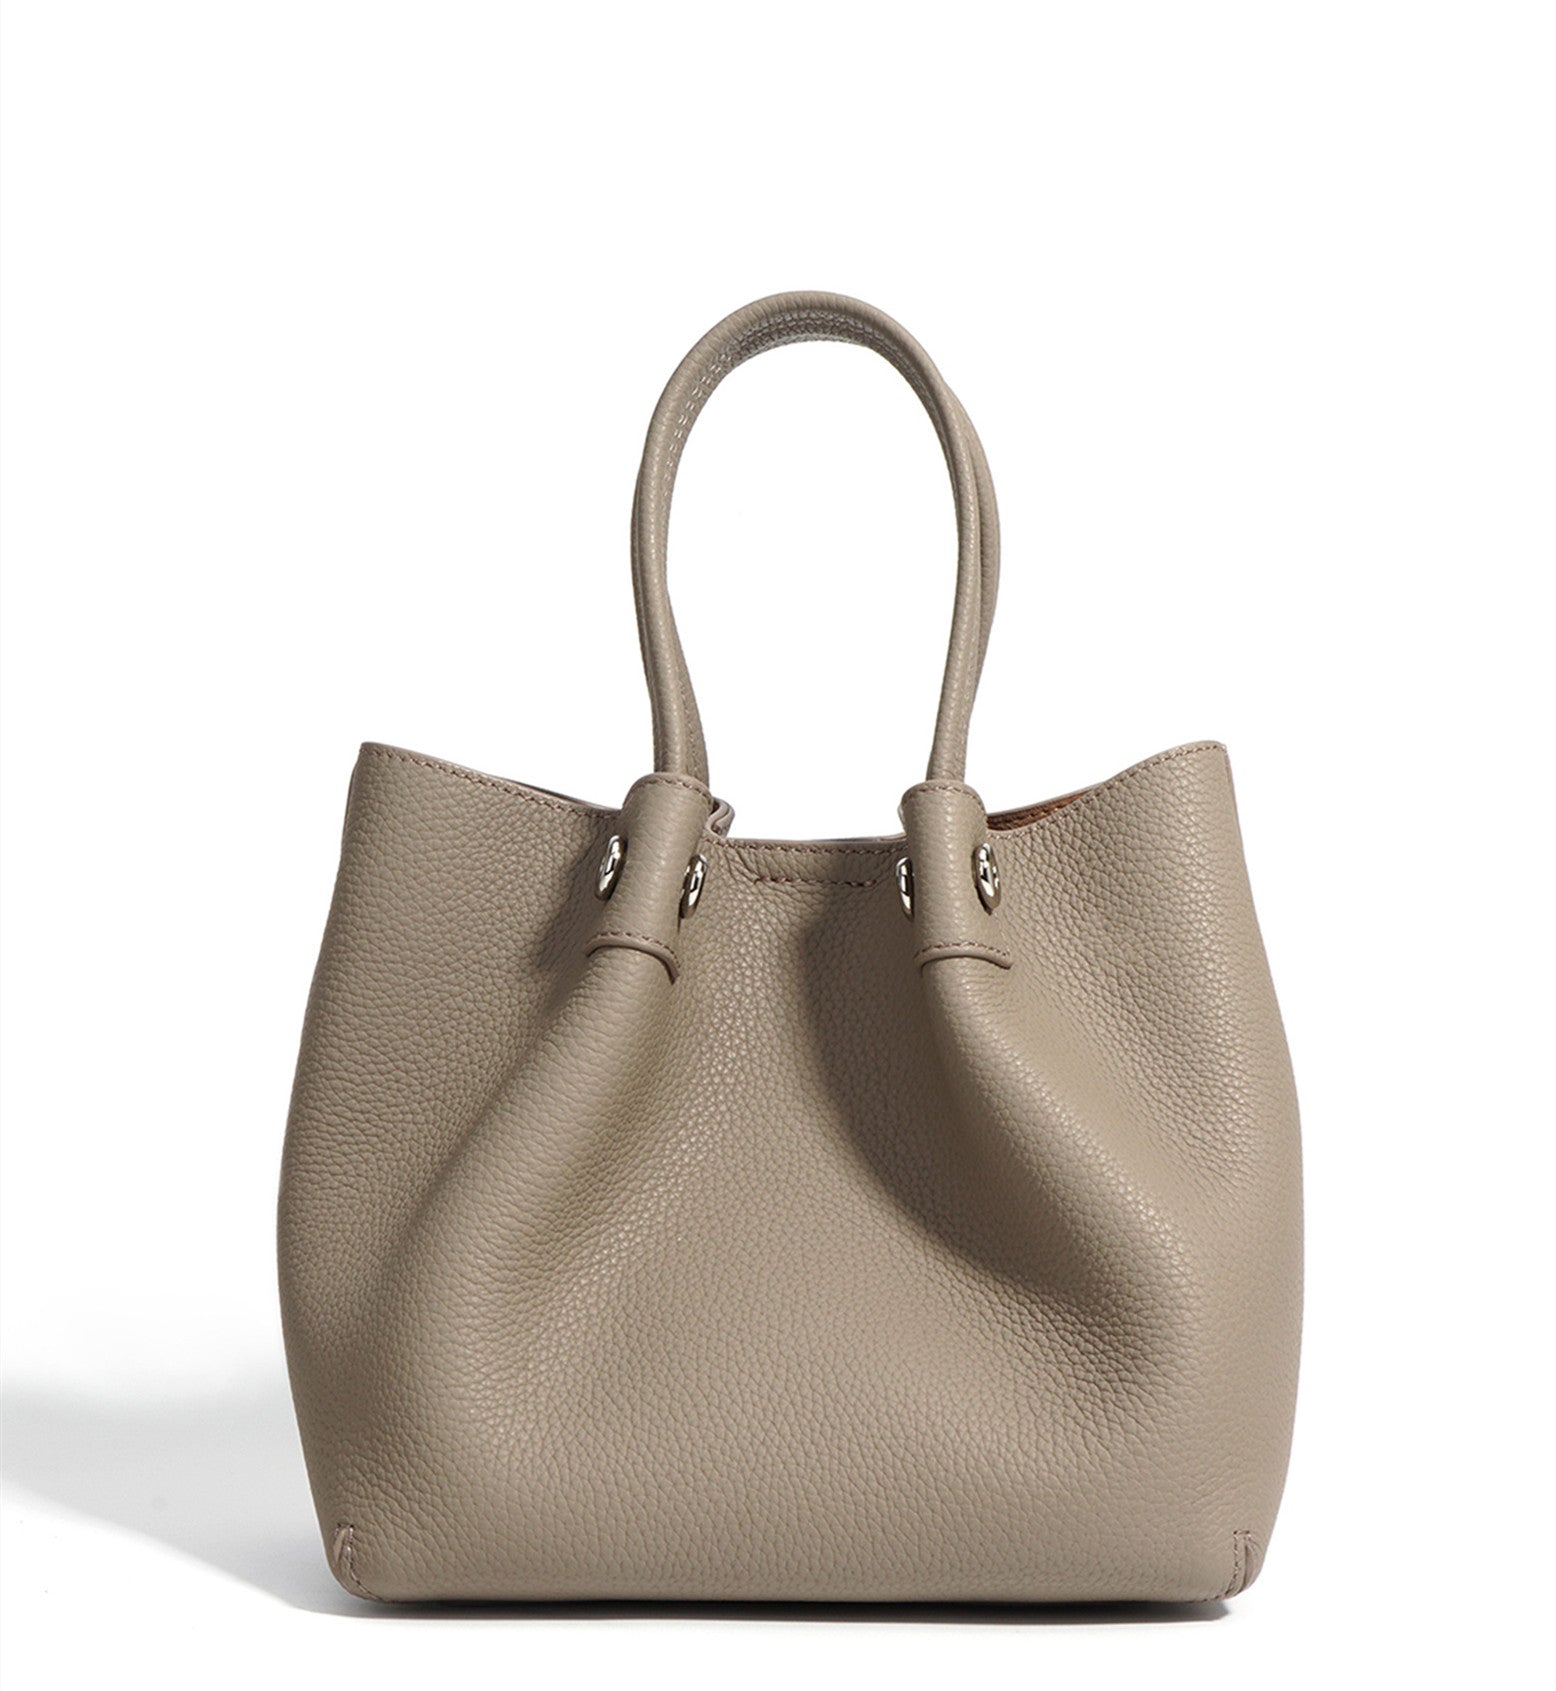 Genuine Leather Handbag with Adjustable Long Strap for Women